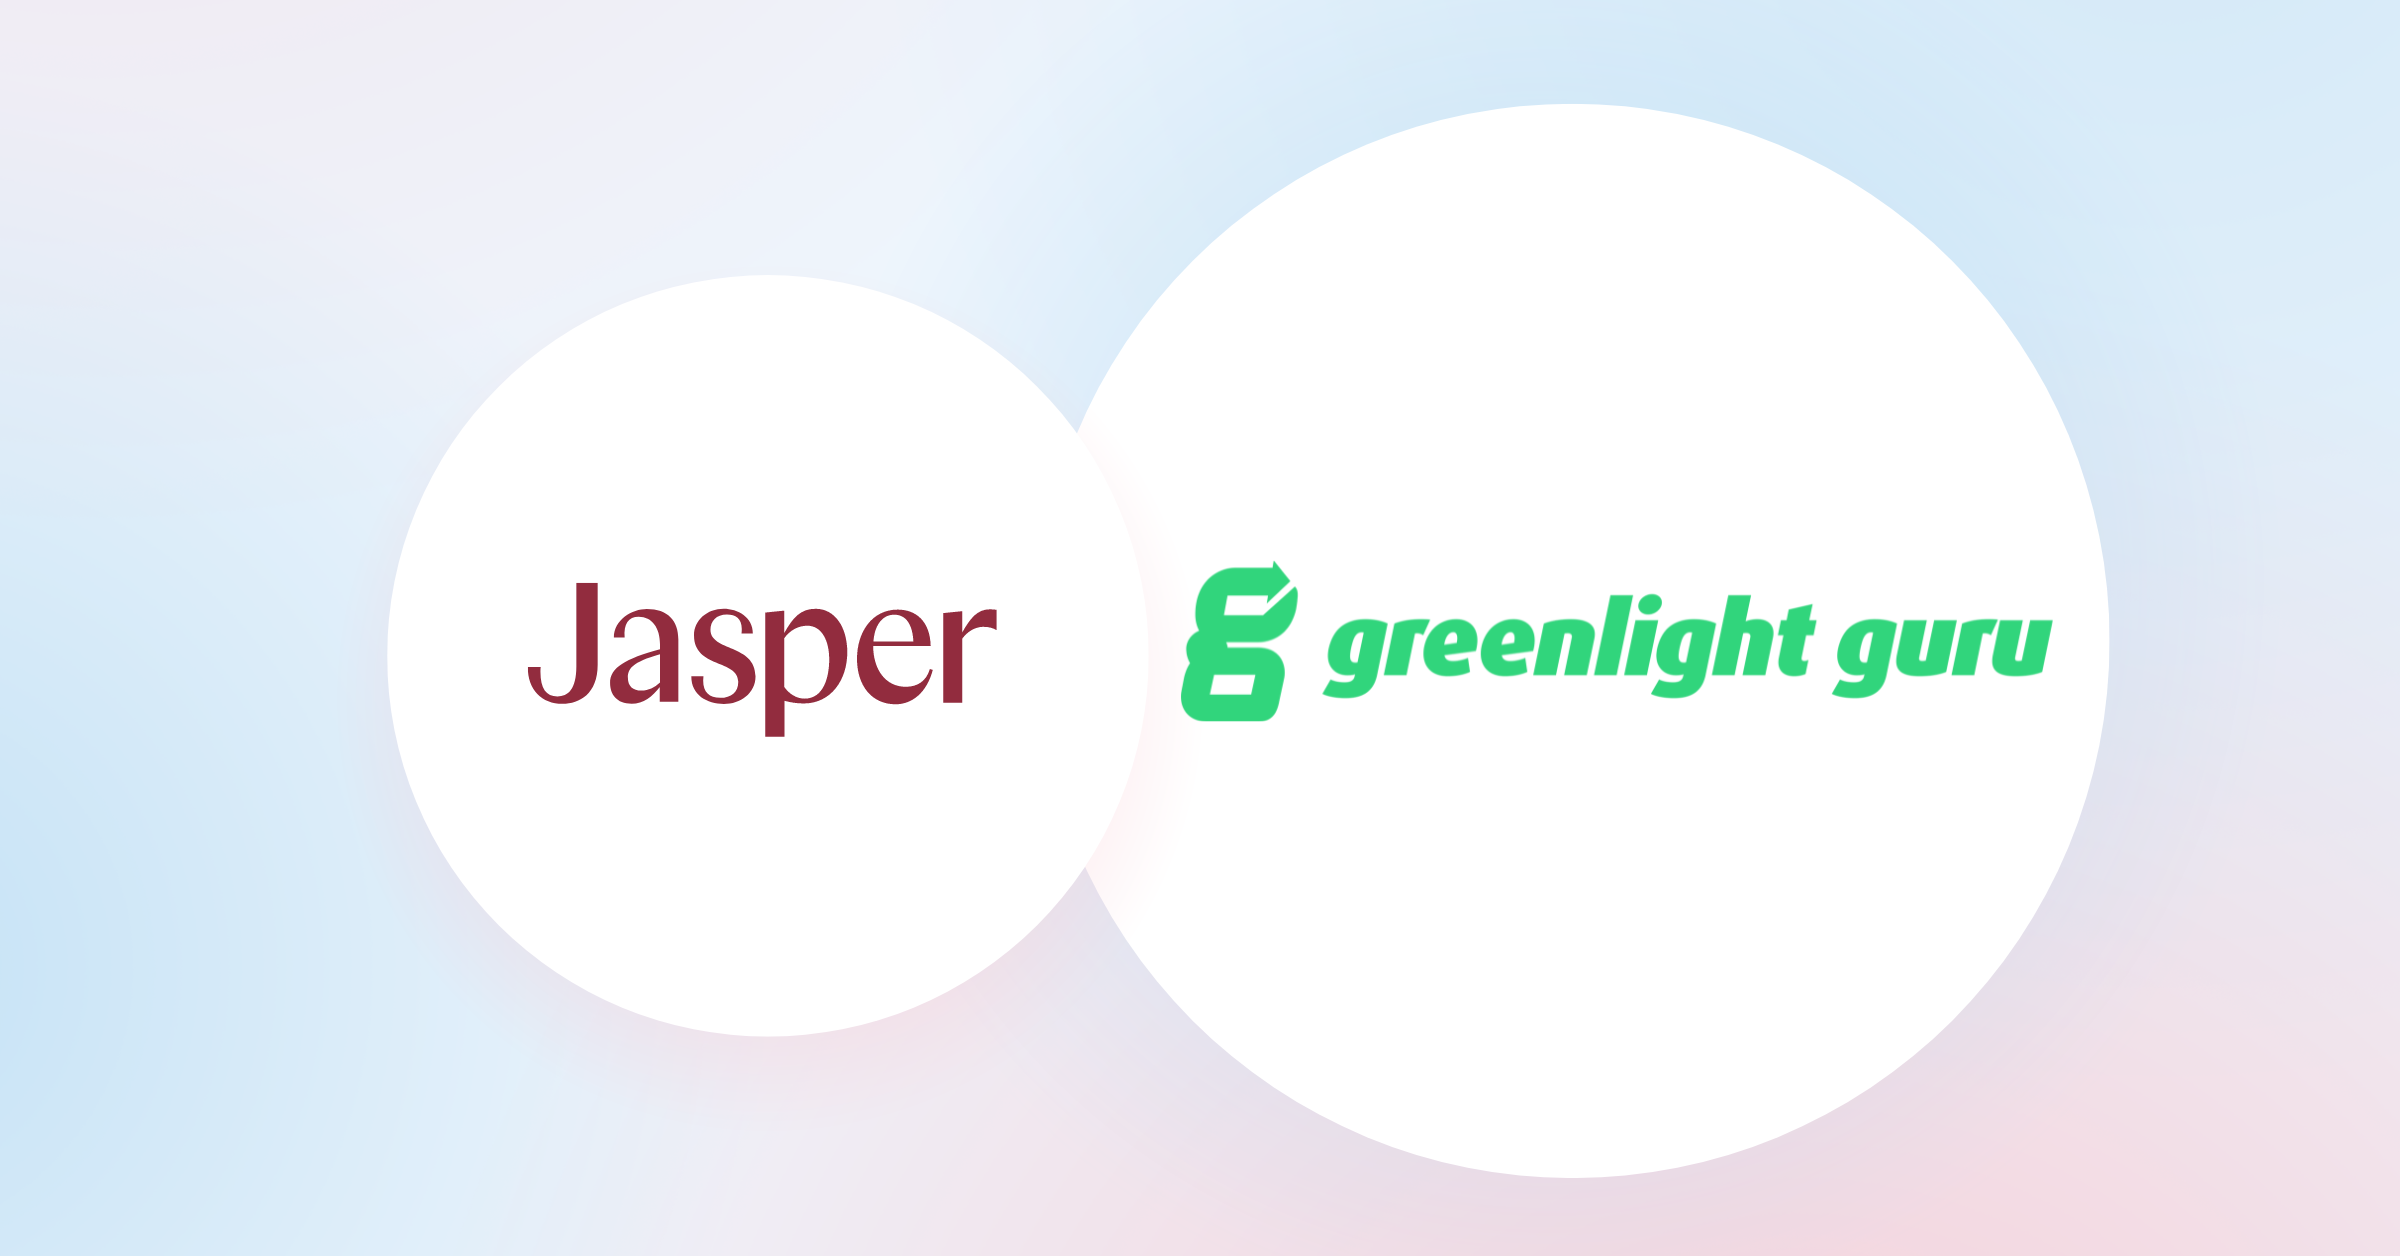 Jasper and green light guru logos in two circles next.